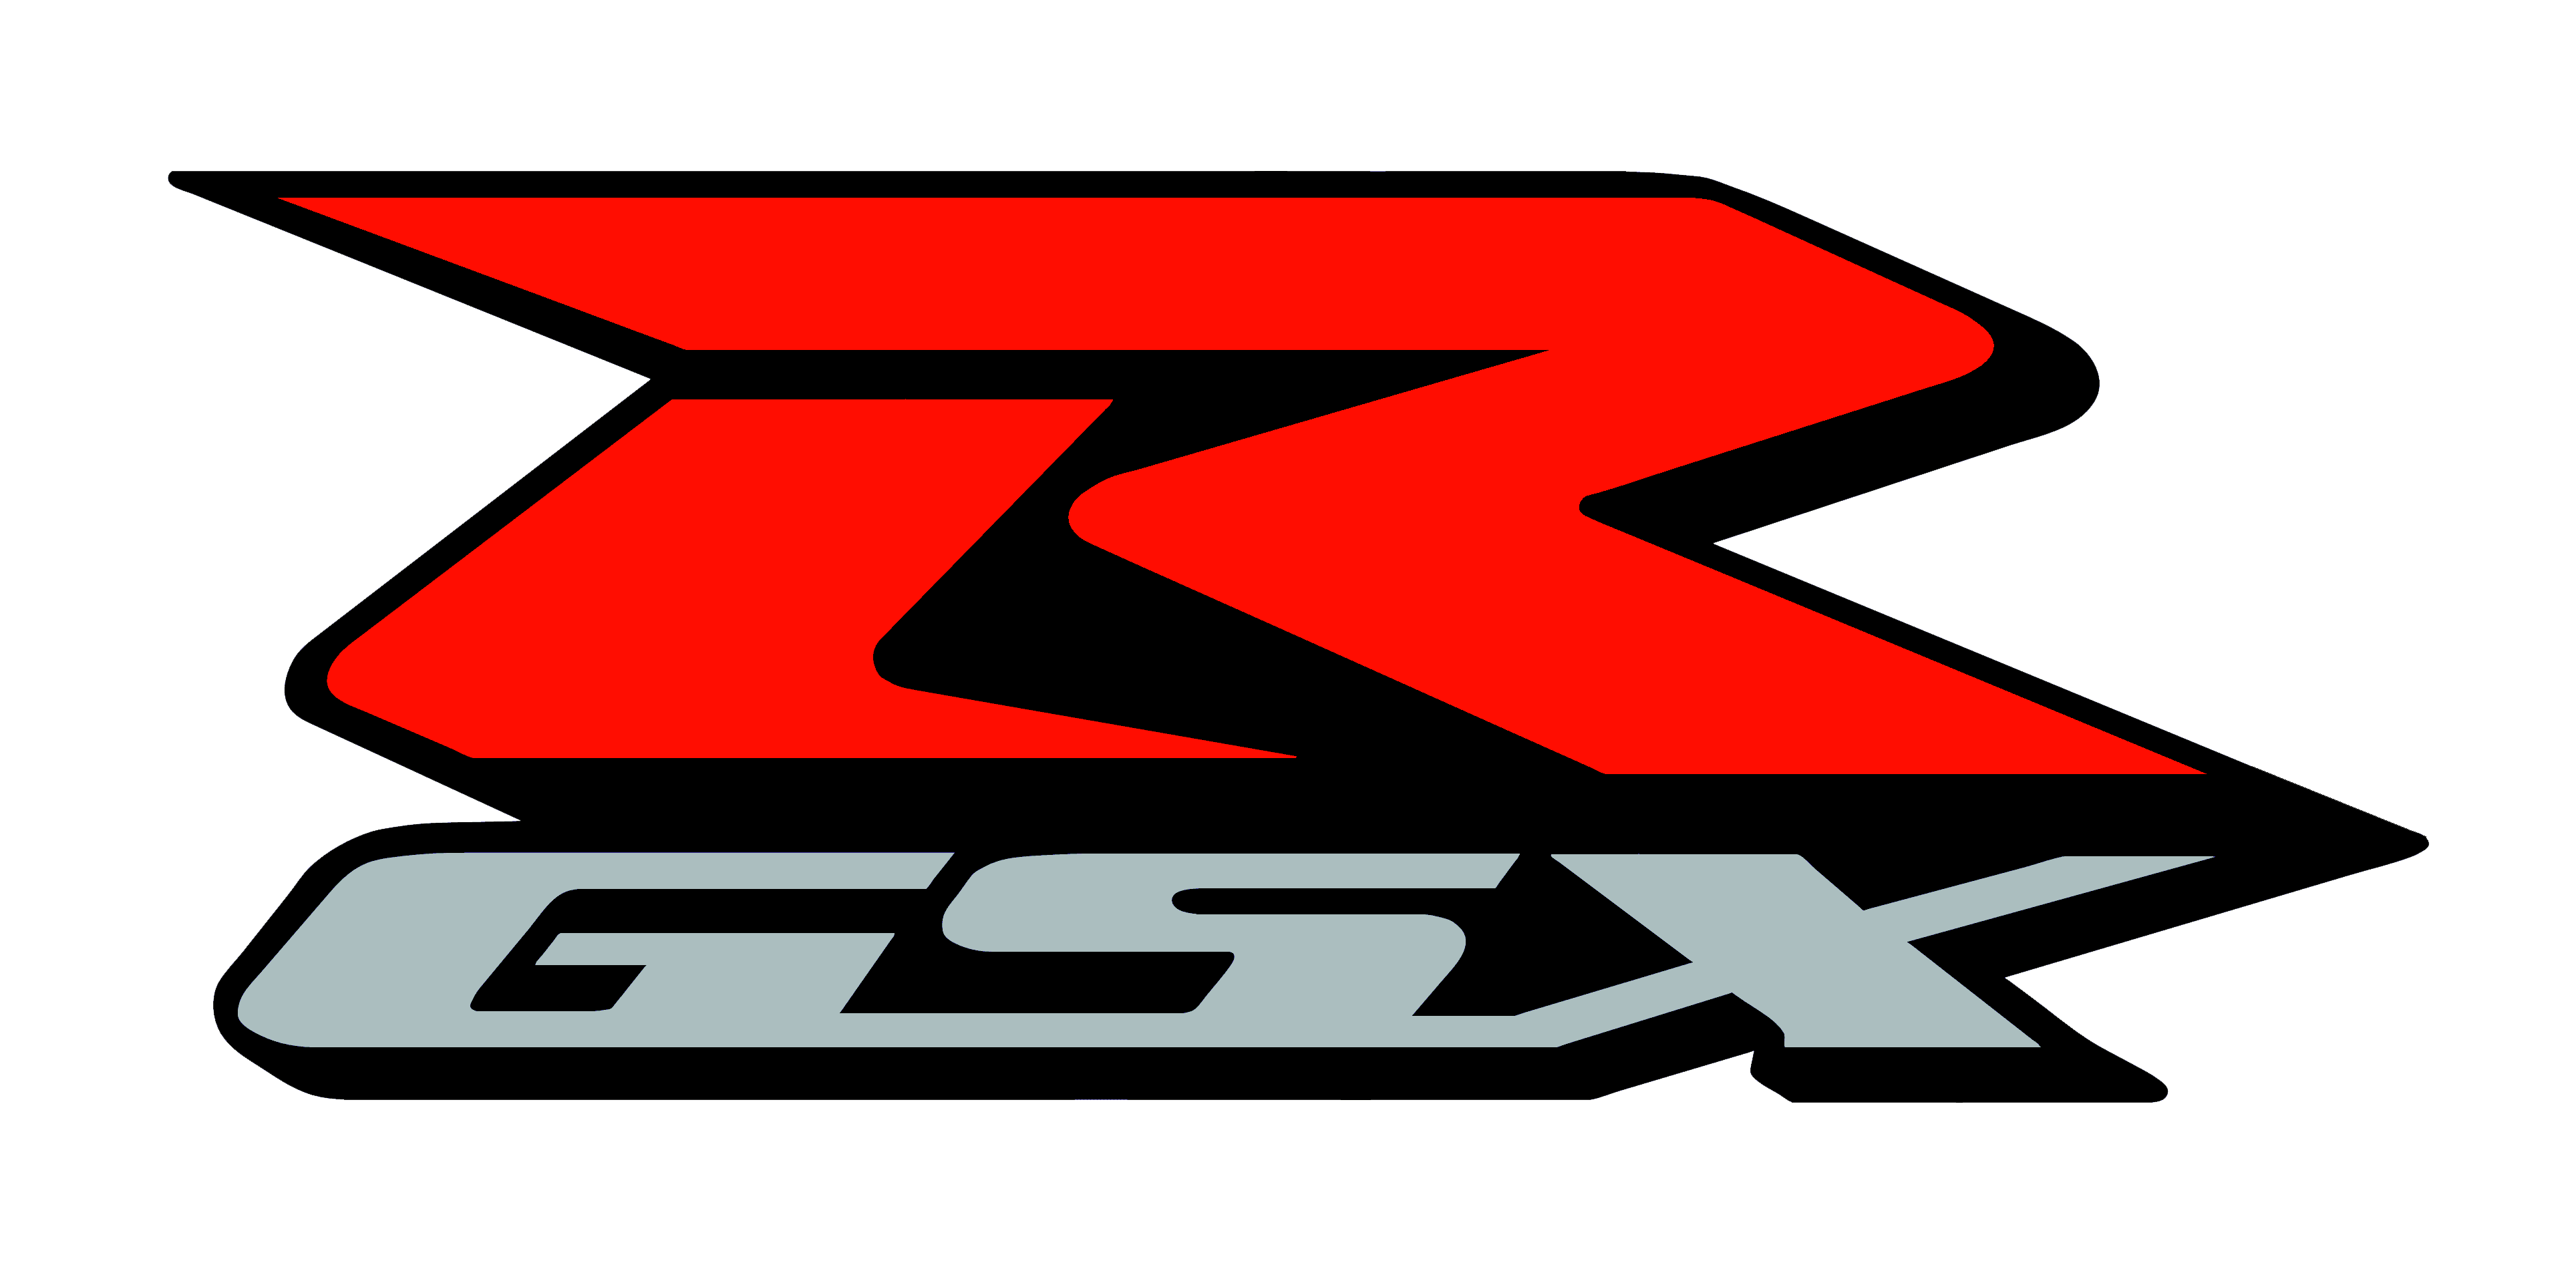  Suzuki  Logos 